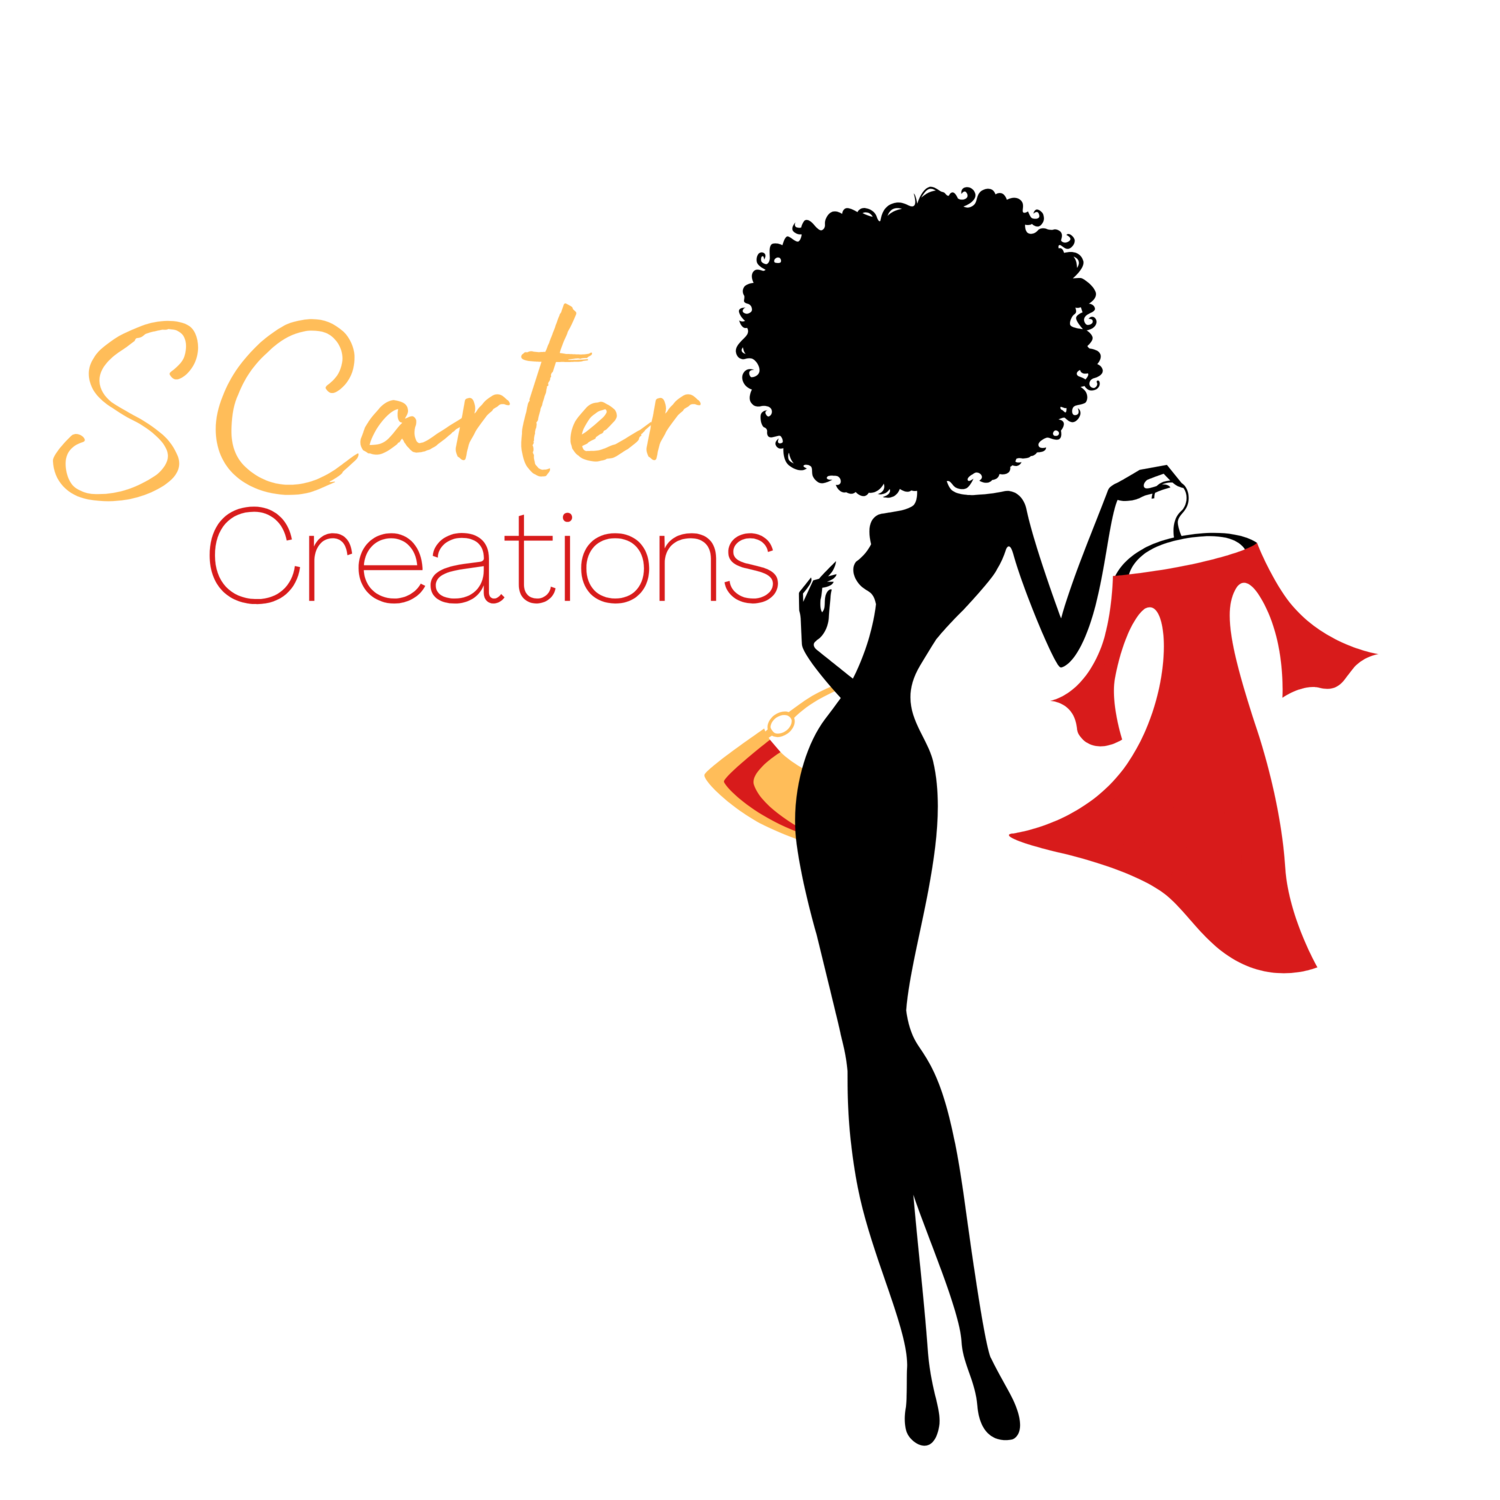 S. Carter Creations